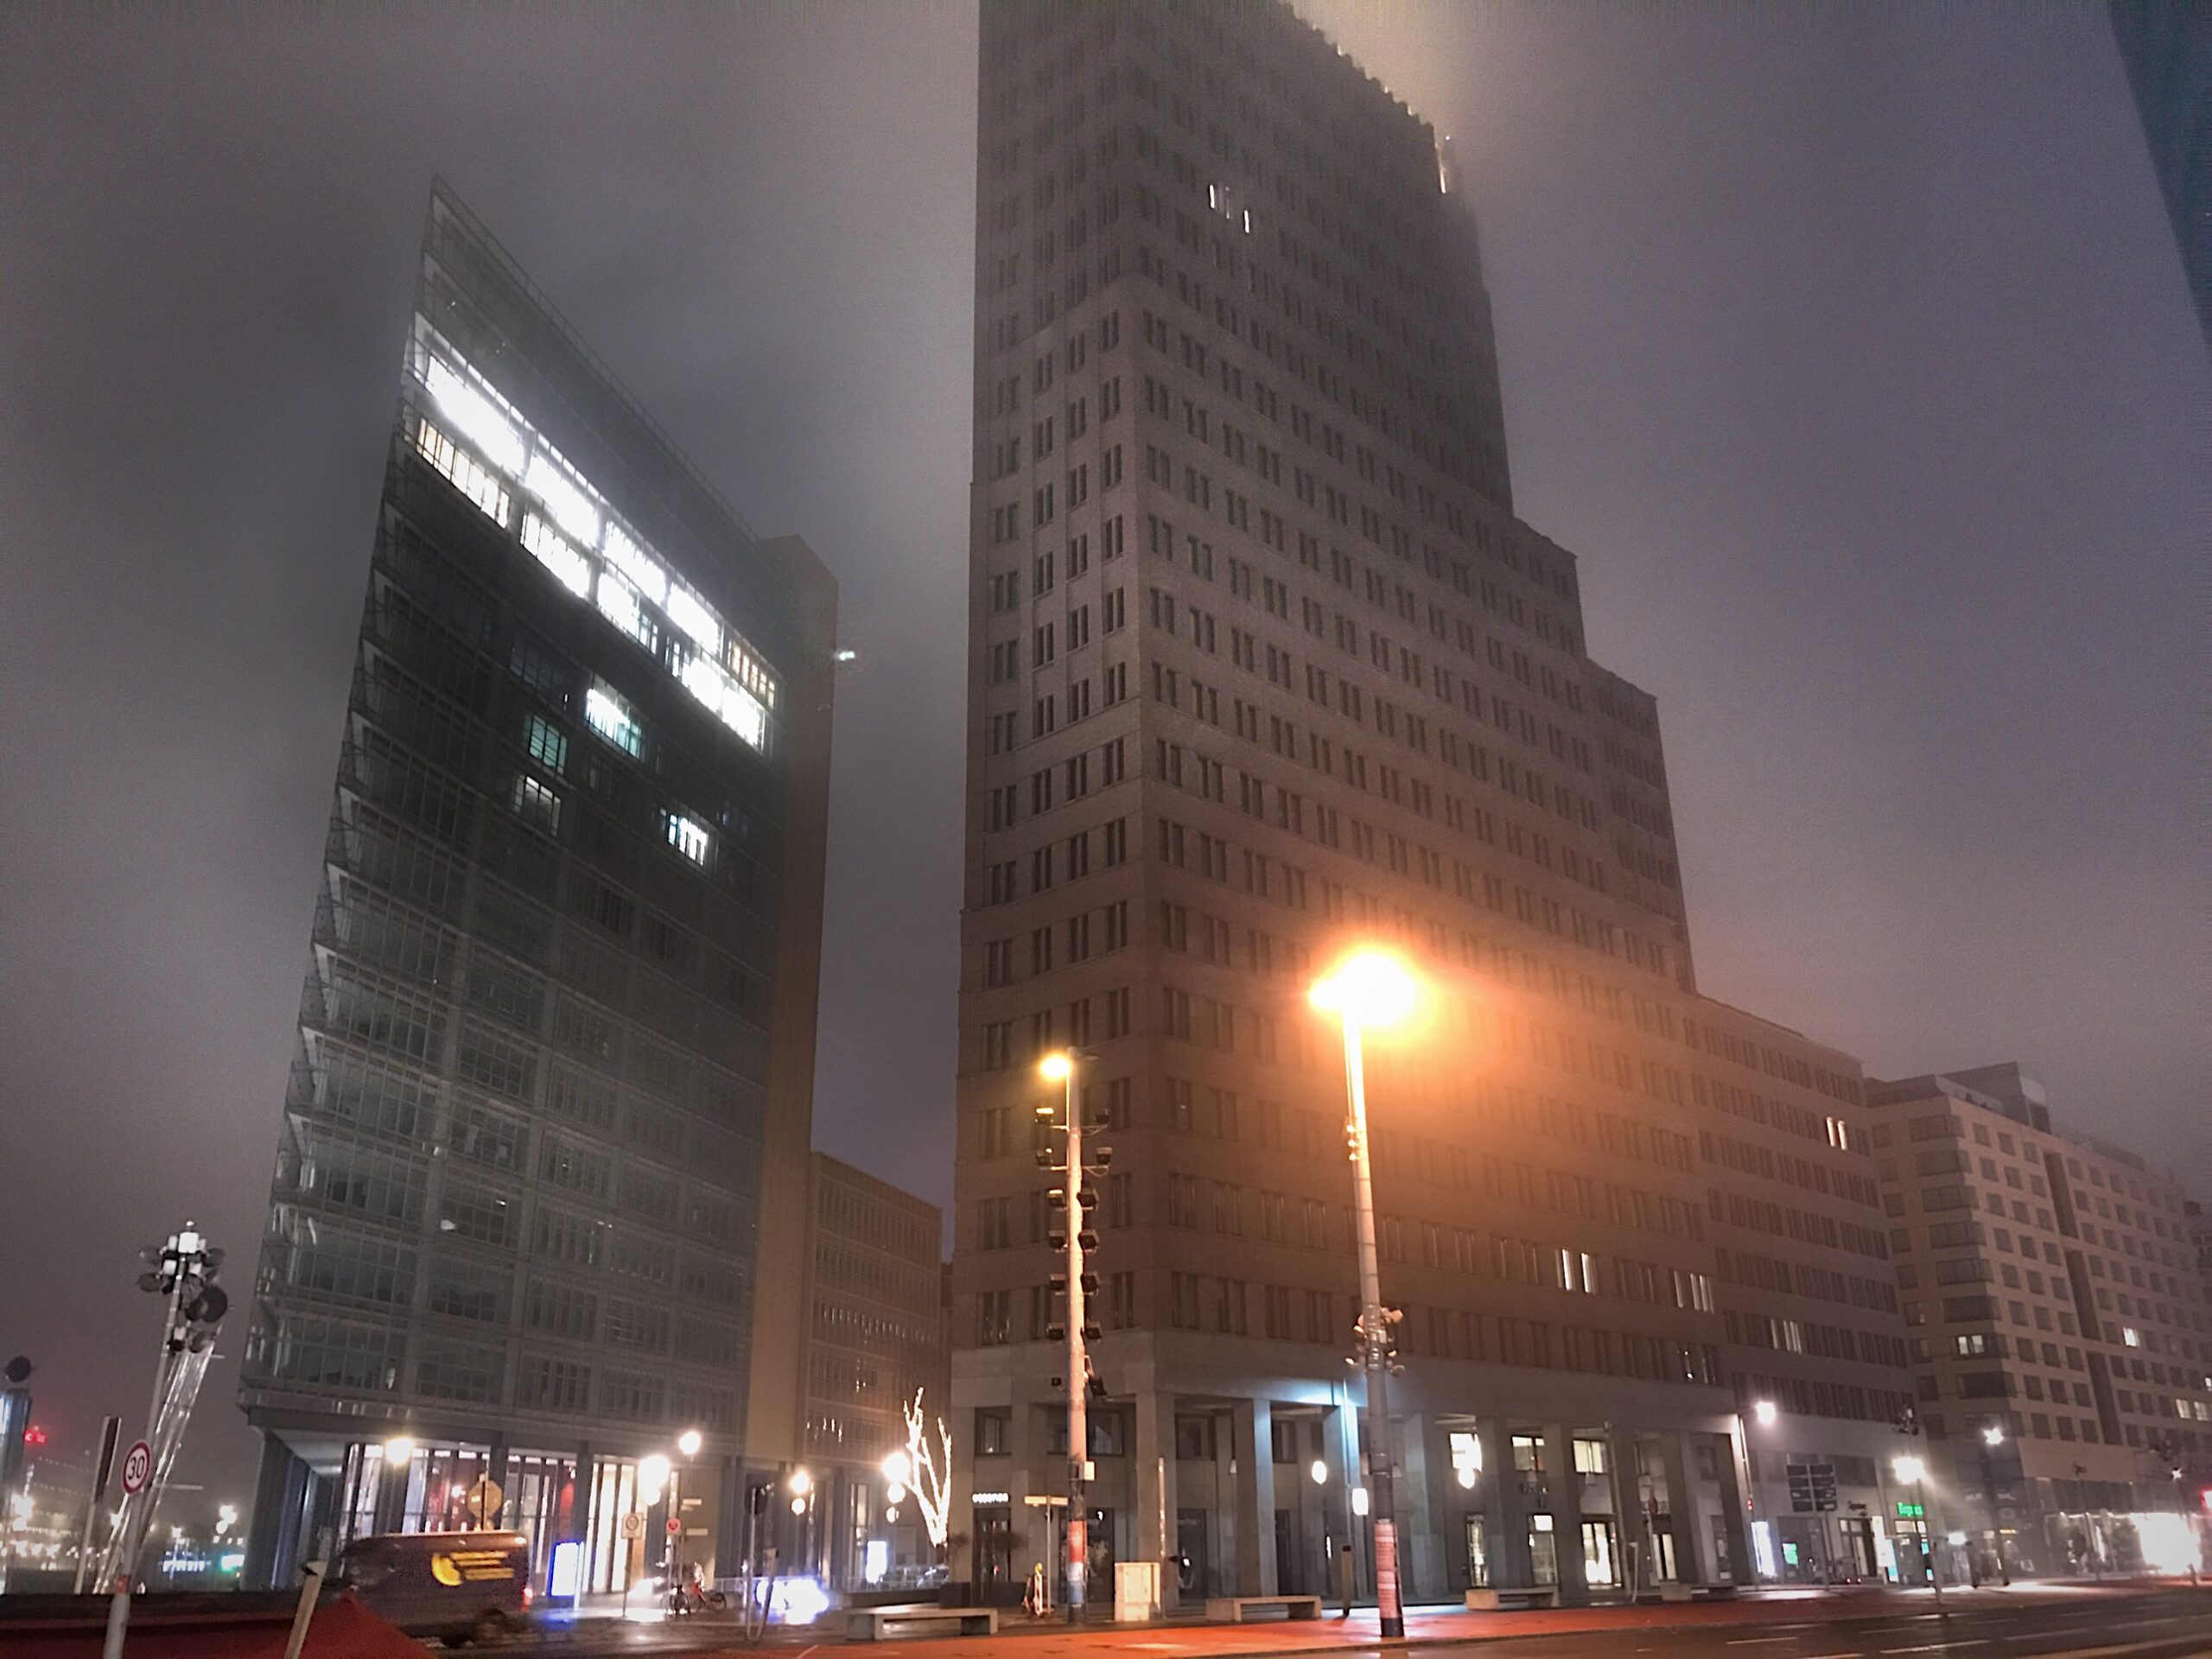 Morning Mist in Berlin